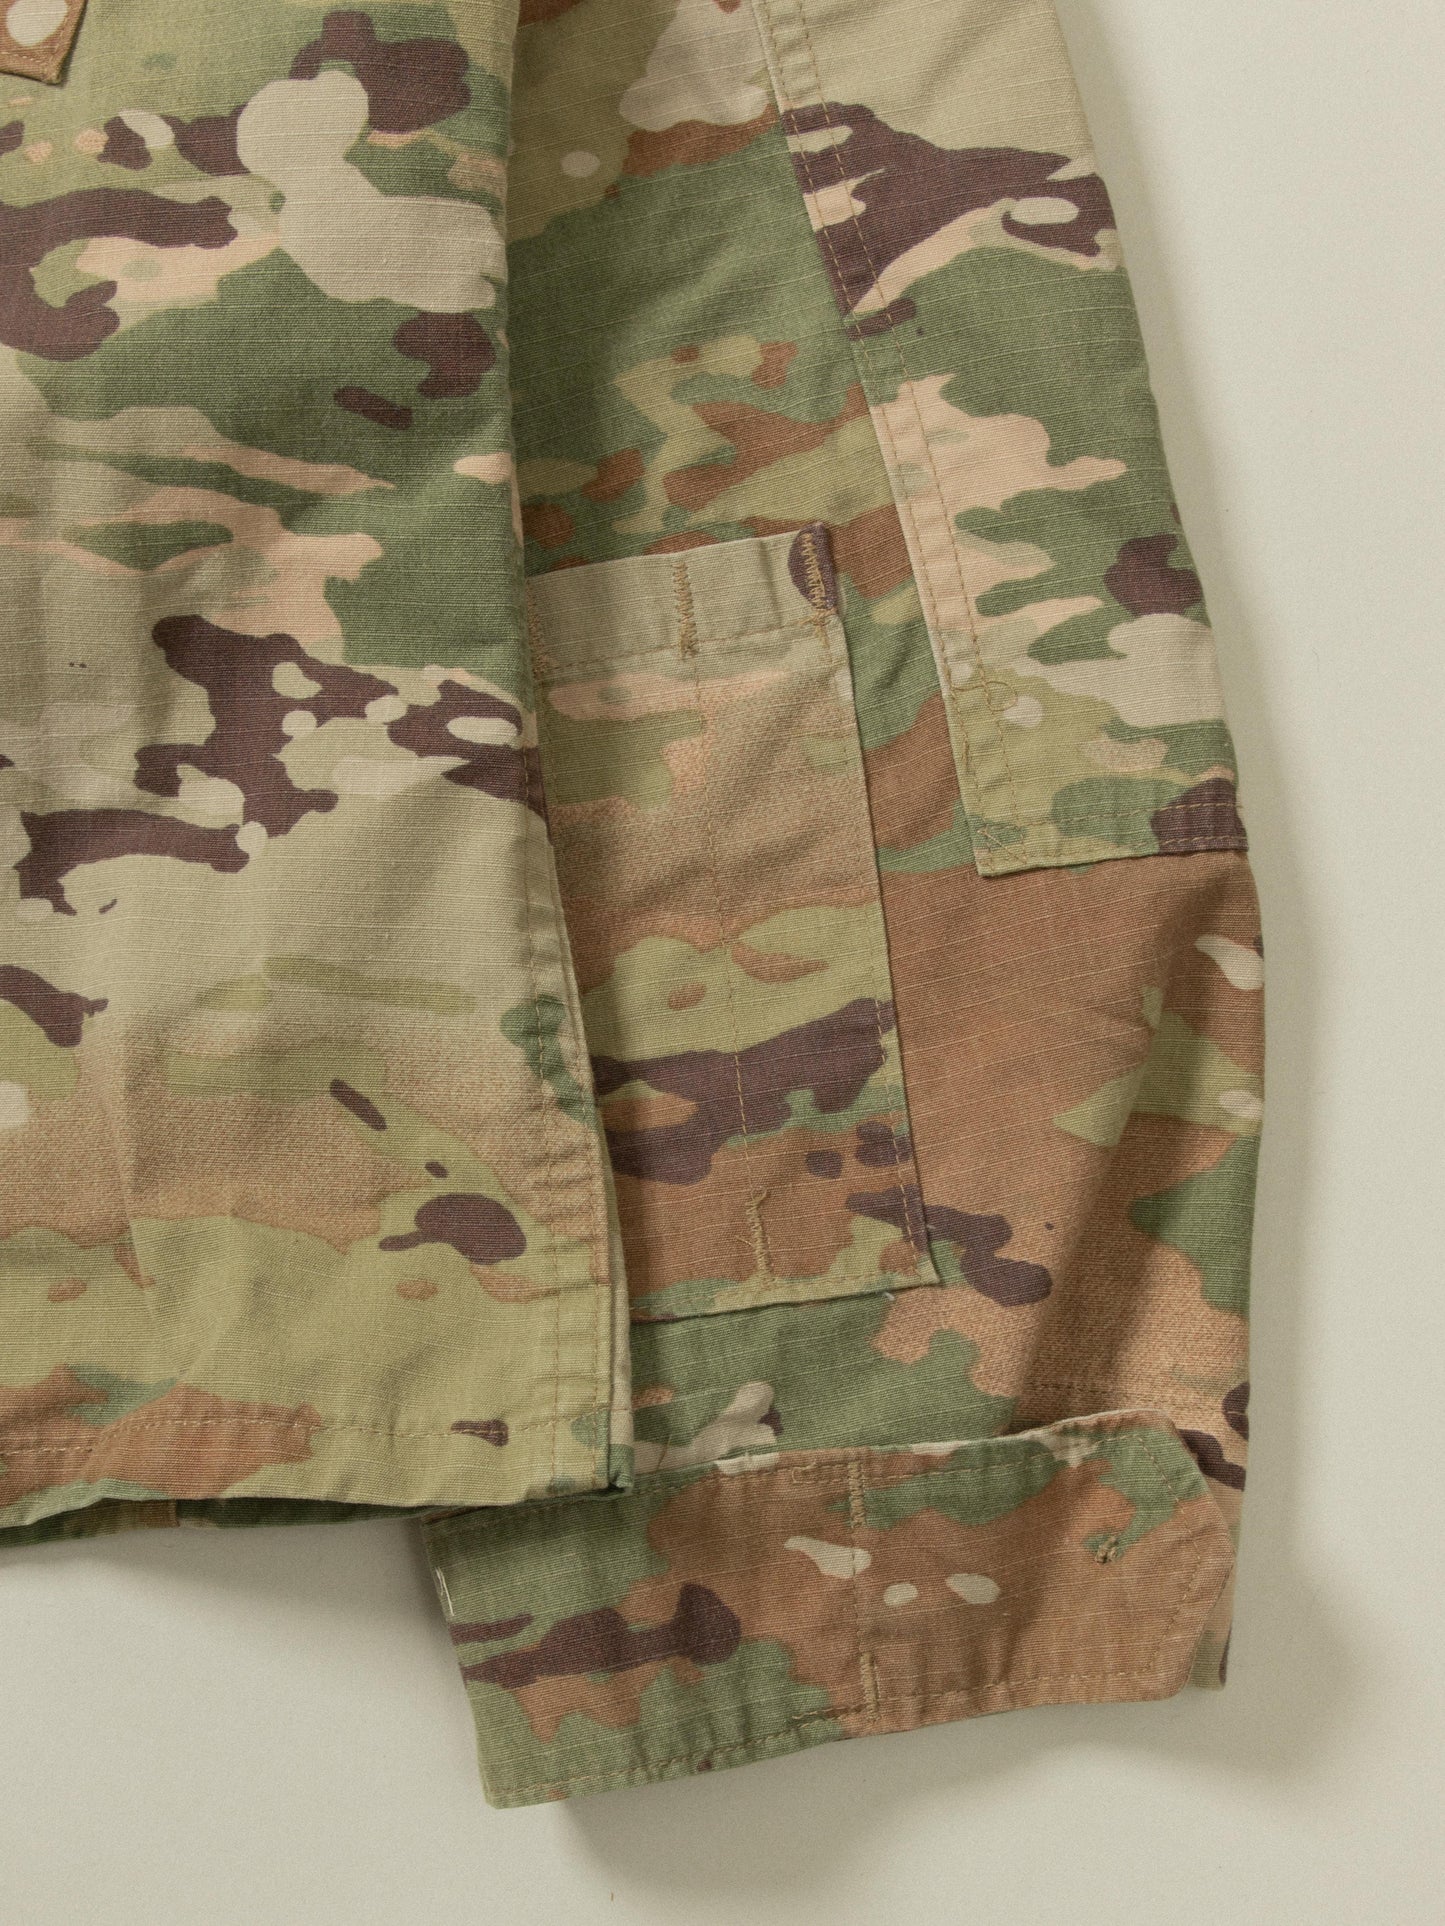 2000s US Army Multicam Jacket (M)